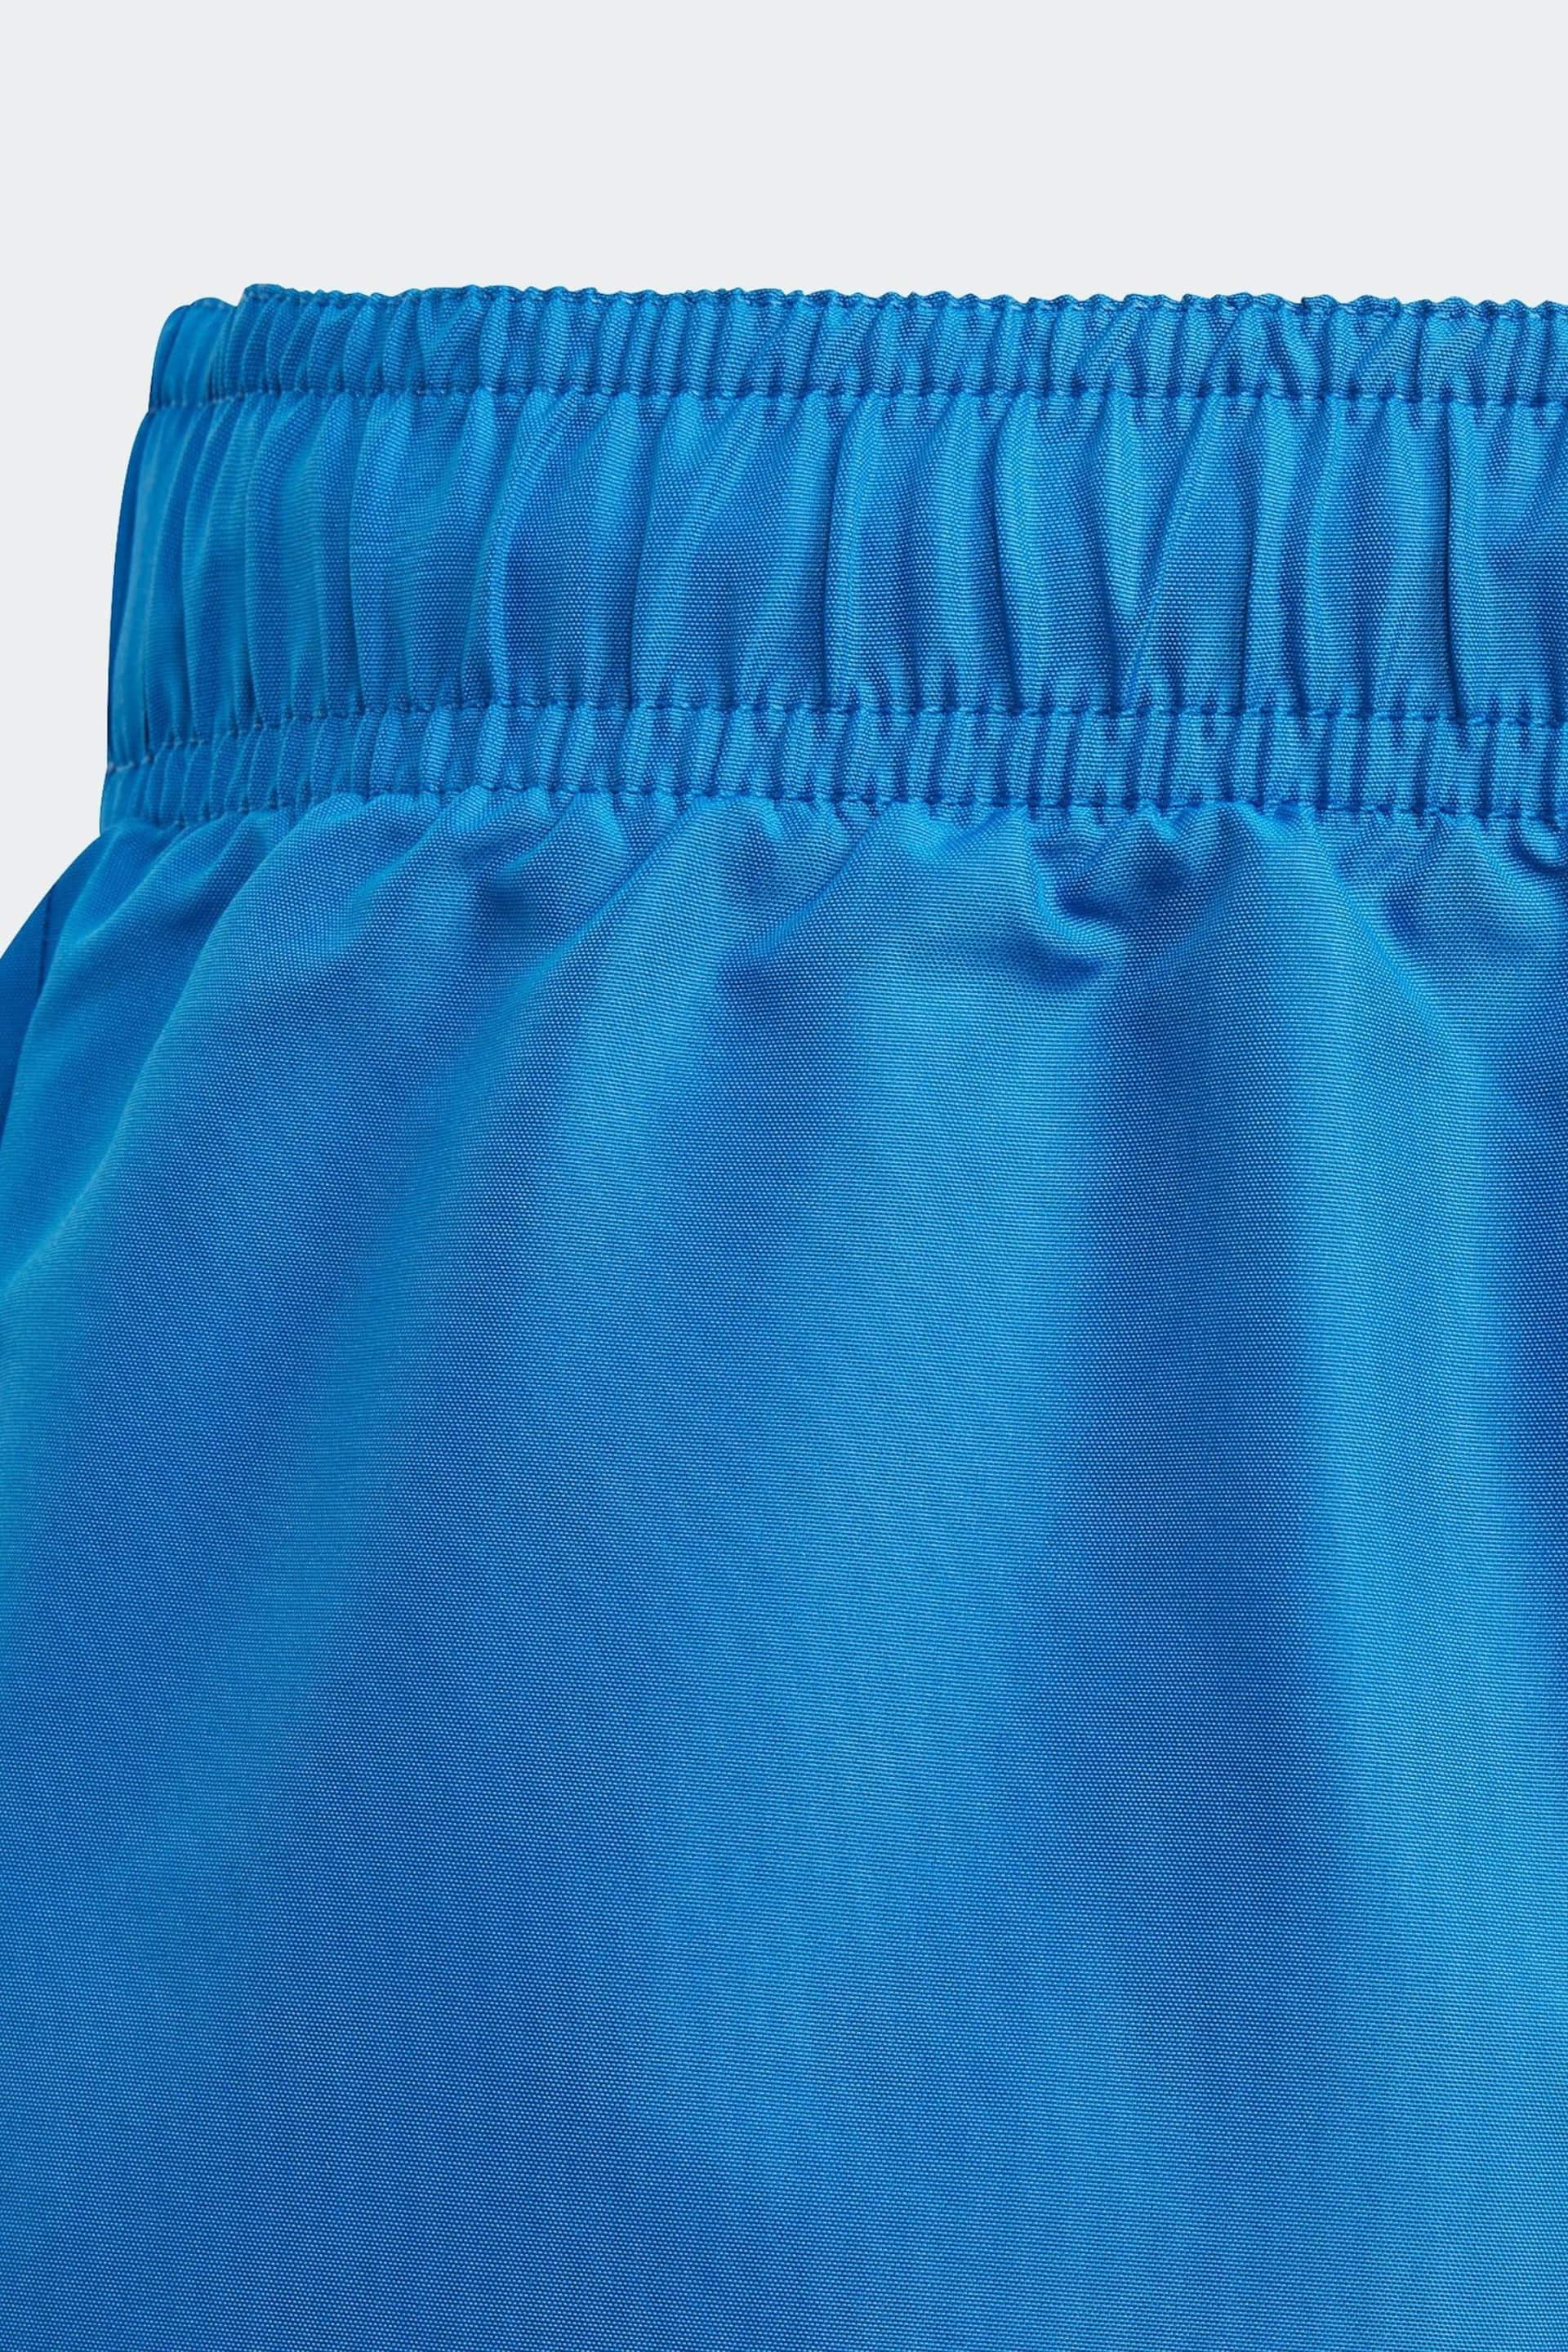 adidas Bright Blue Classic Badge Of Sport Swim Shorts - Image 4 of 5